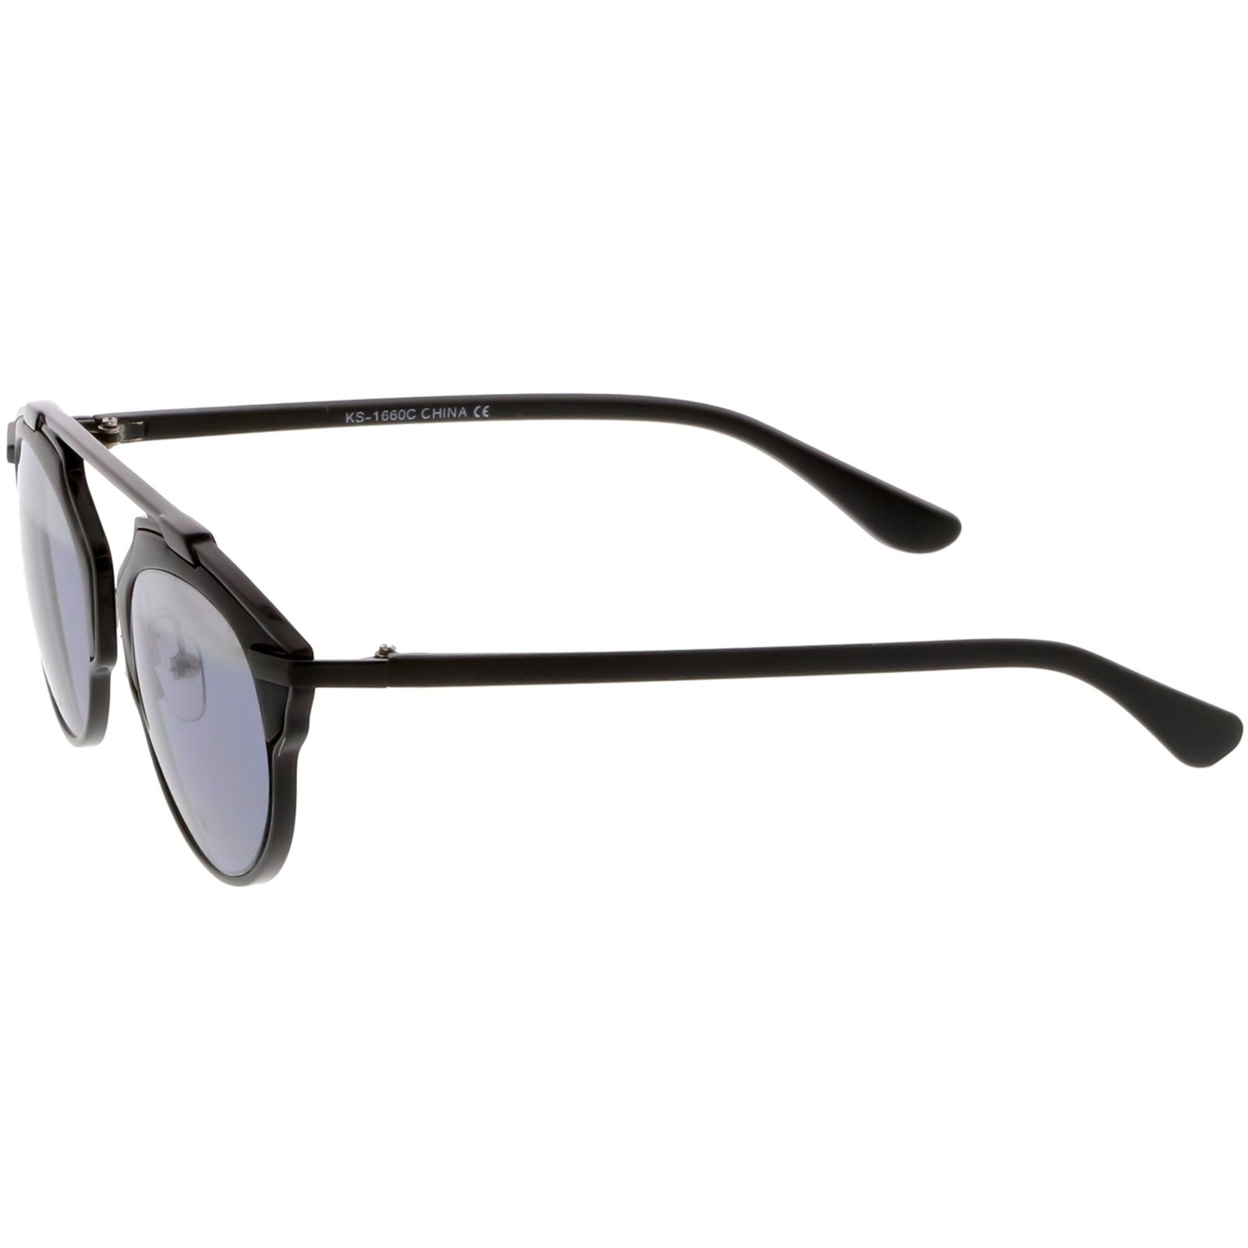 Modern Metal Crossbar Partial Mirrored Lens Pantos Aviator Sunglasses 48mm - Black / Yellow Mirror-Smoke